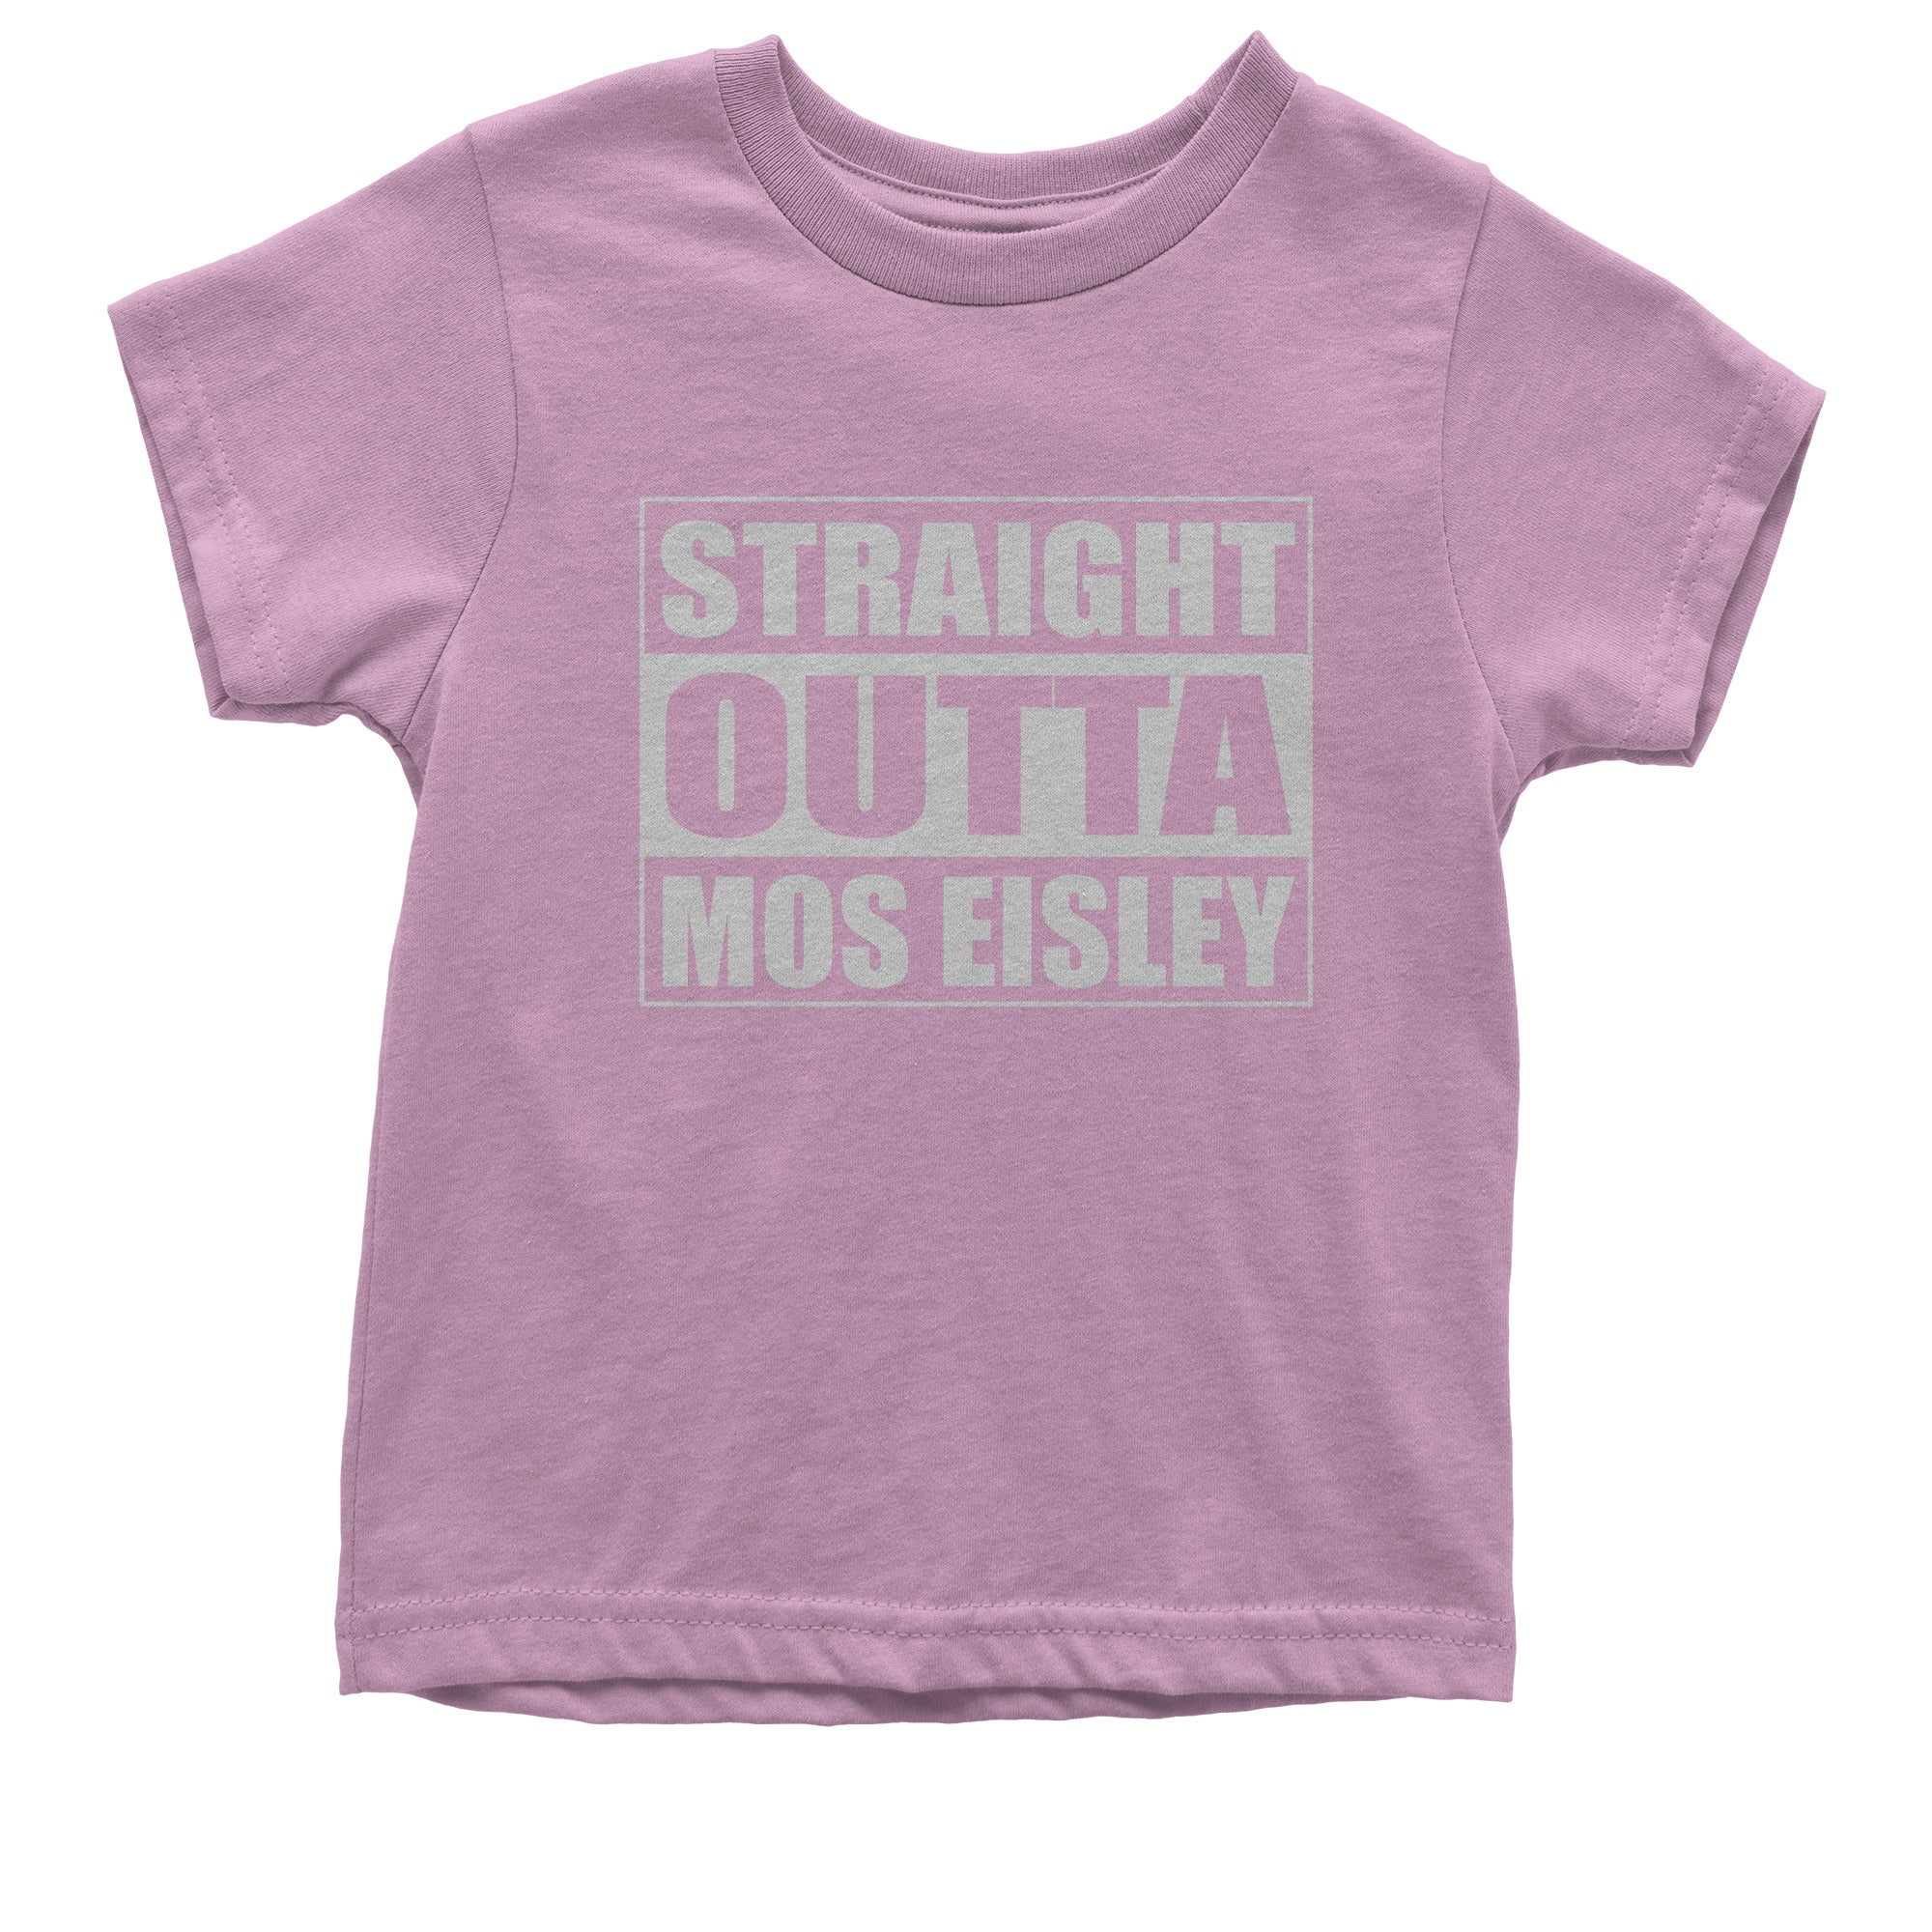 Straight Outta Mos Eisley Kid's T-Shirt